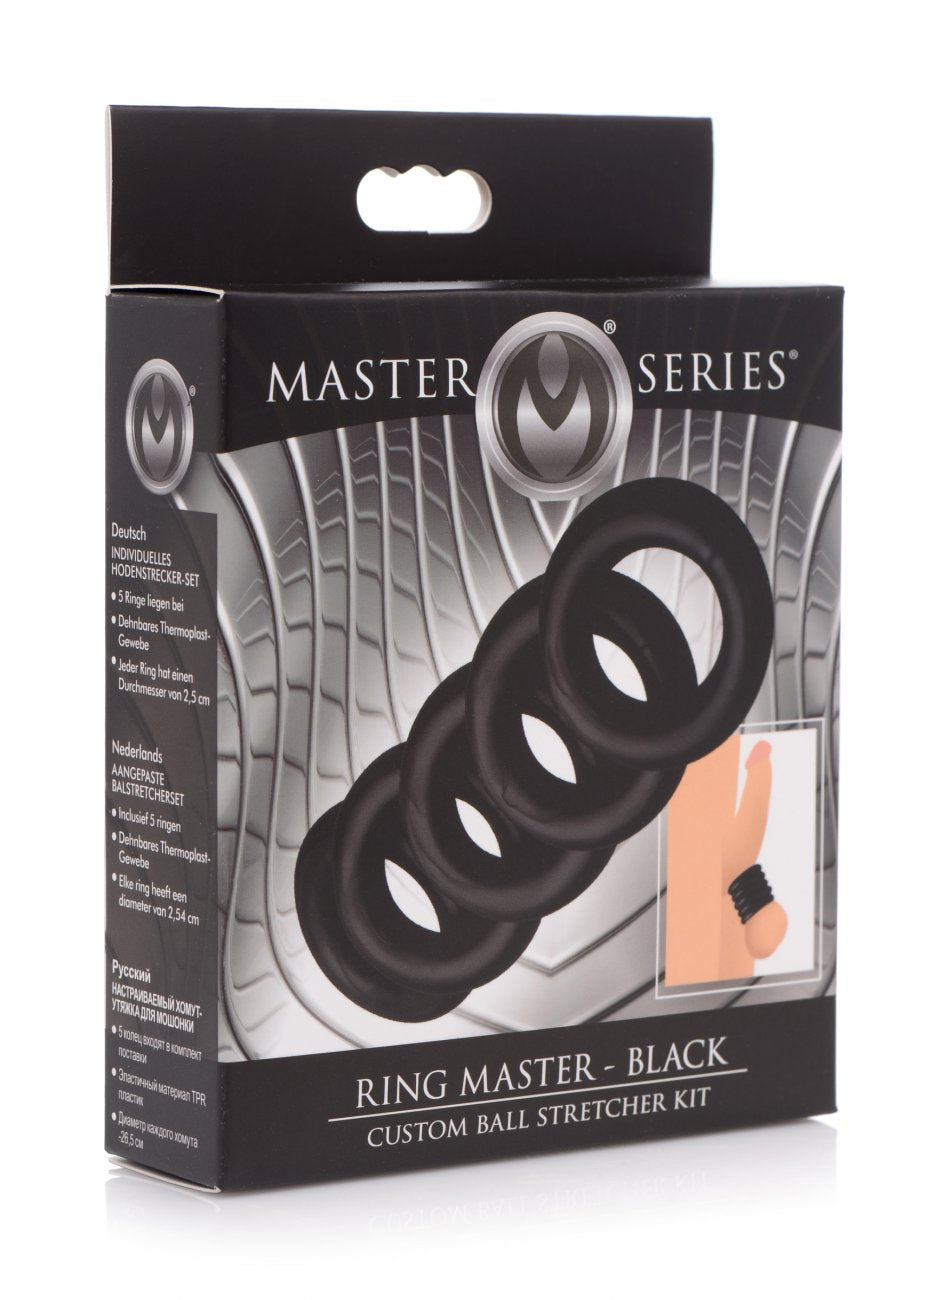 Ring Master Custom Ball Stretcher Kit - Black Stretcher Kit